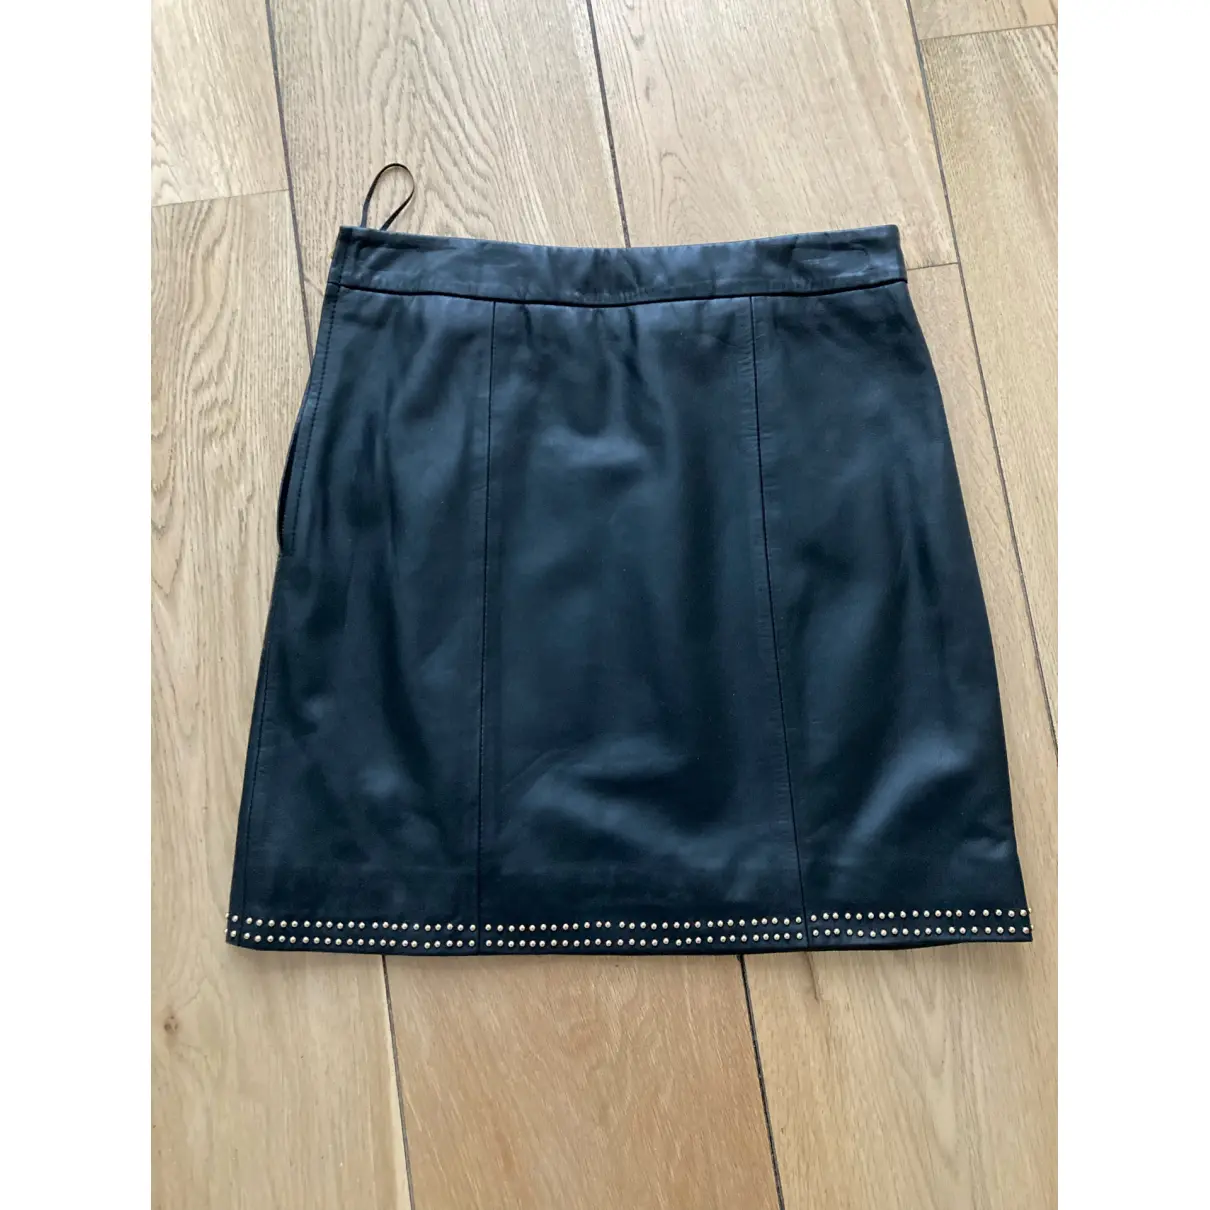 Buy Moschino Leather mini skirt online